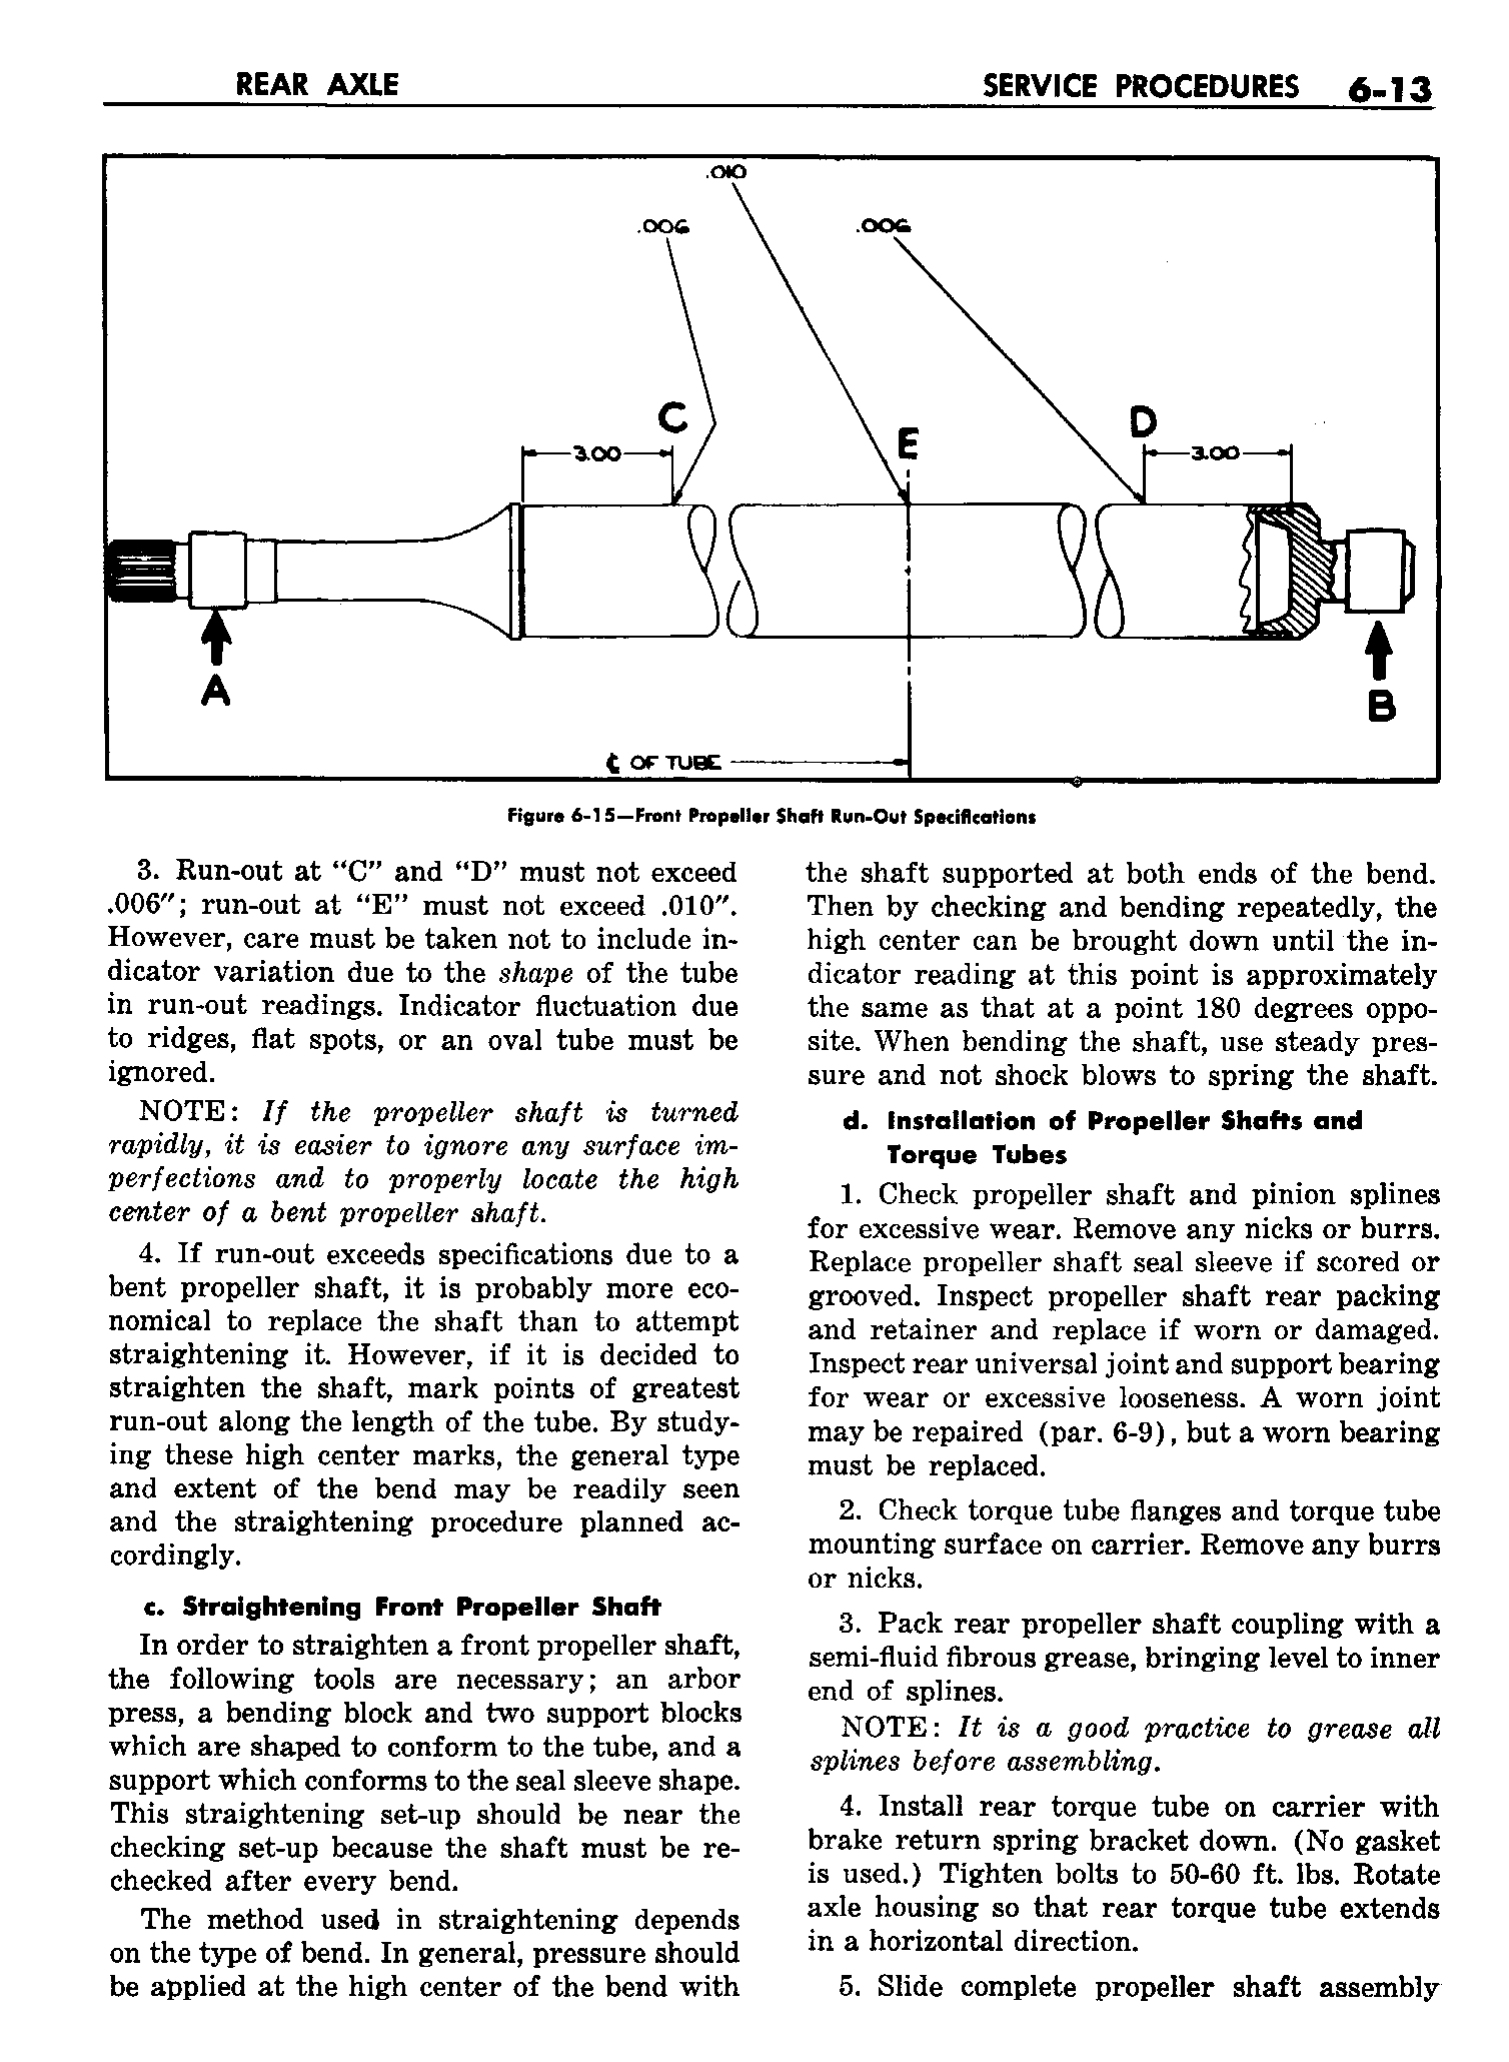 n_07 1958 Buick Shop Manual - Rear Axle_13.jpg